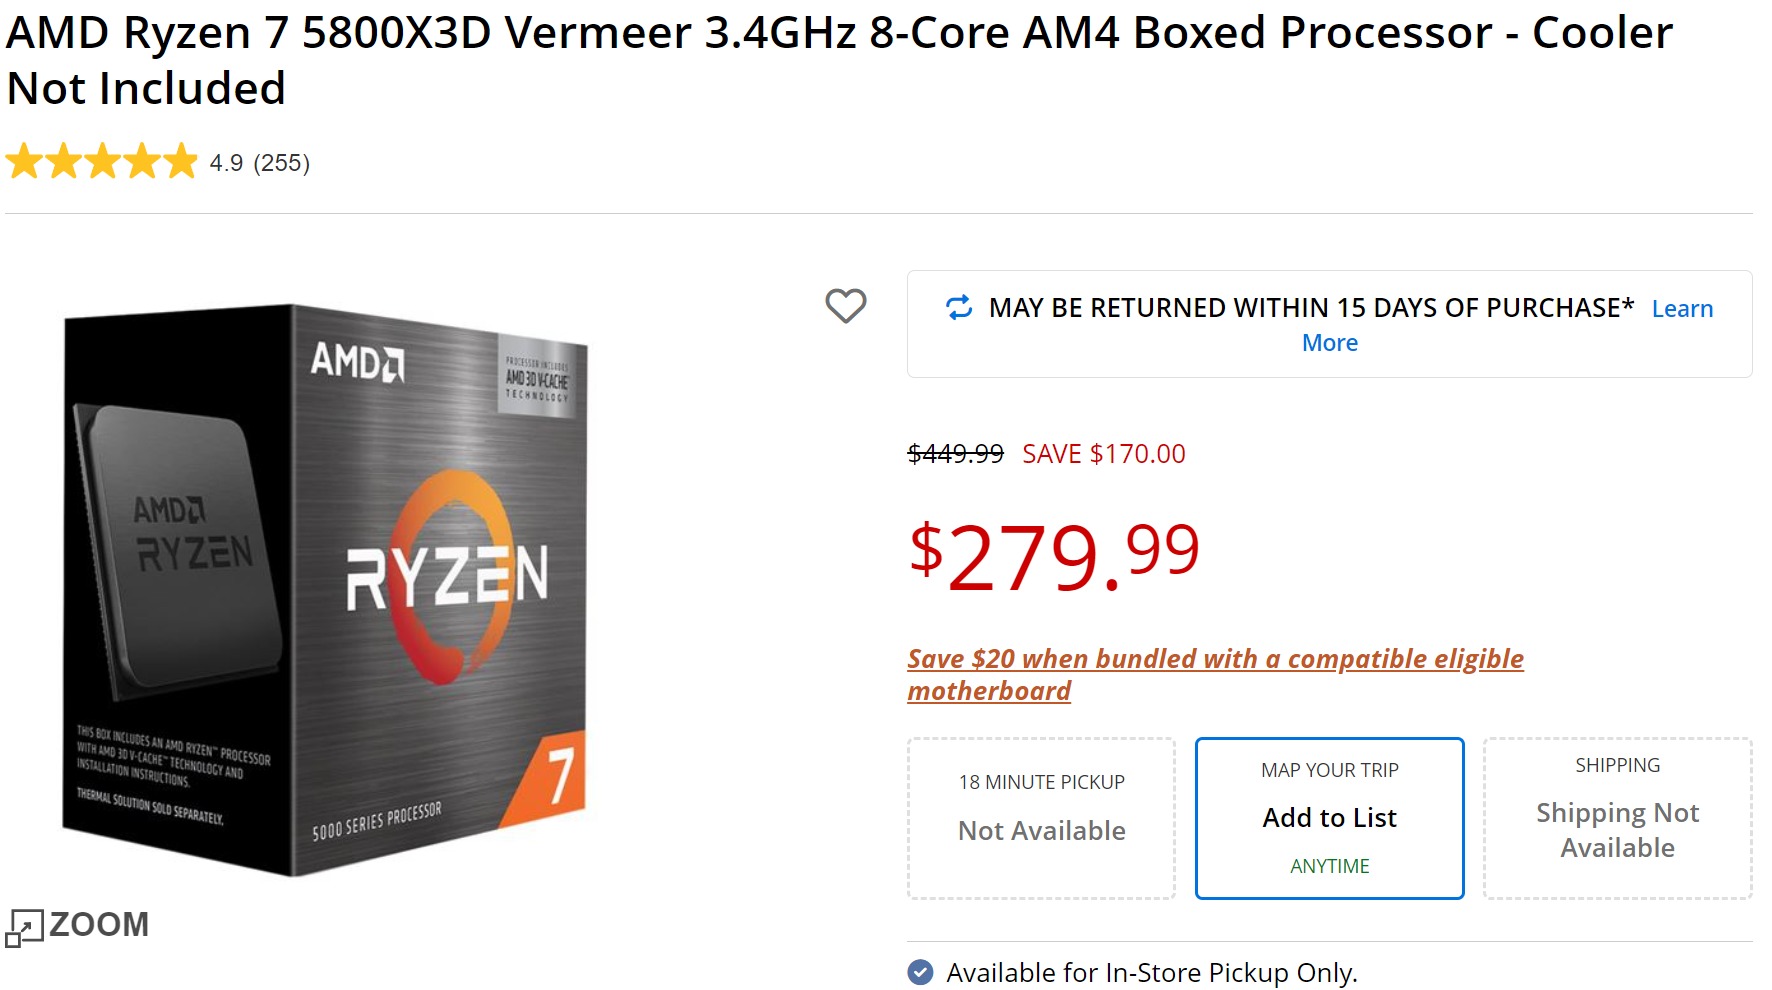 AMD Ryzen 7 5800X3D: The World's Fastest Gaming Desktop Processor 